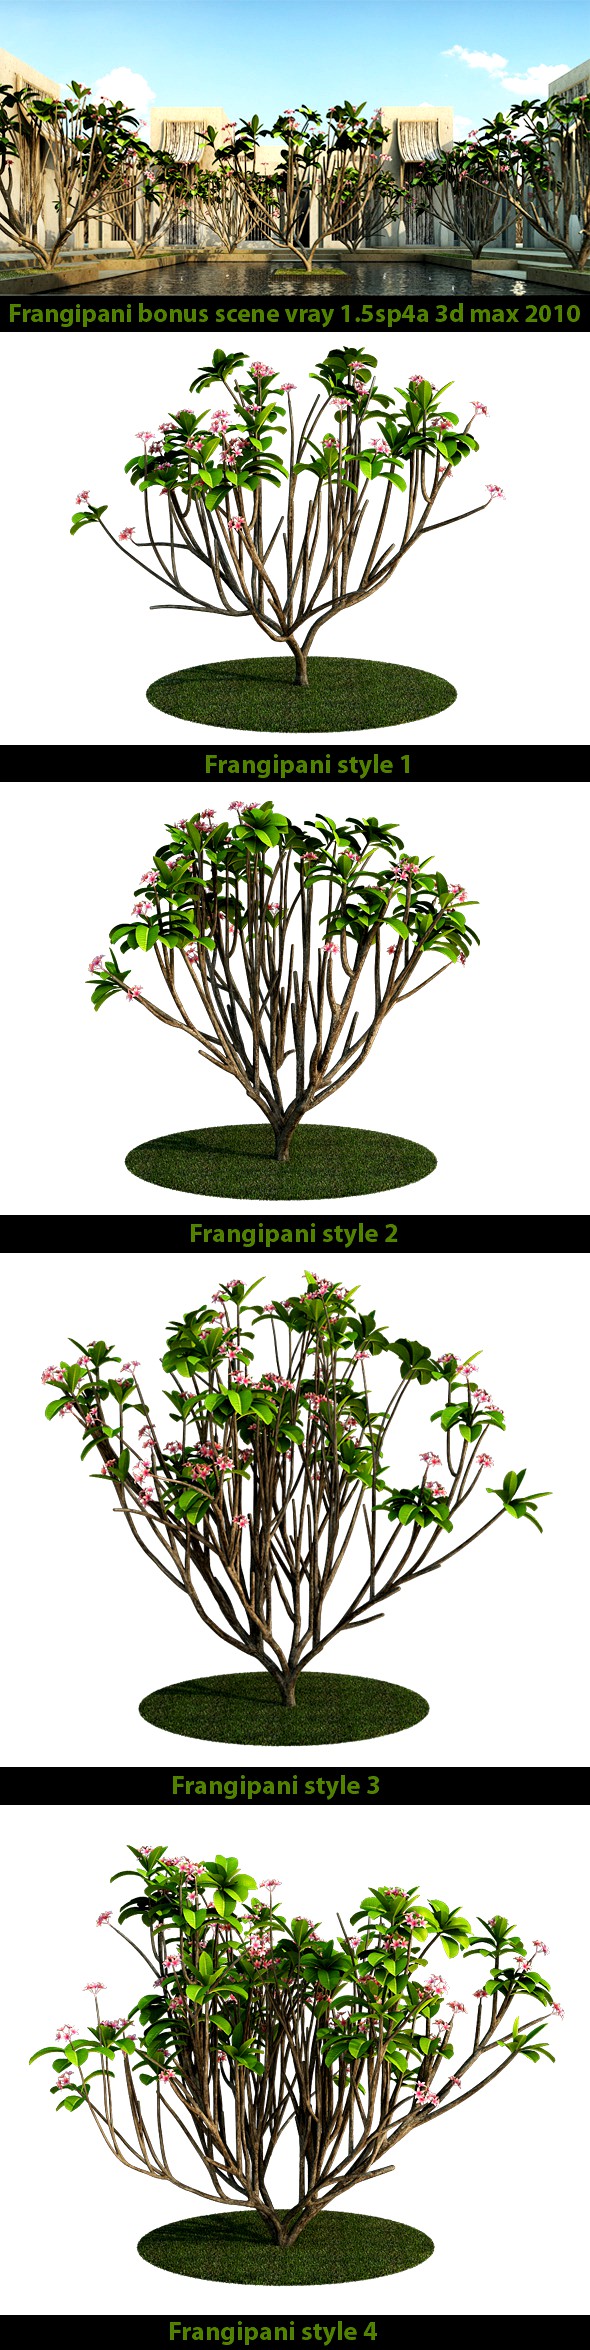 Frangipani Tree v.2